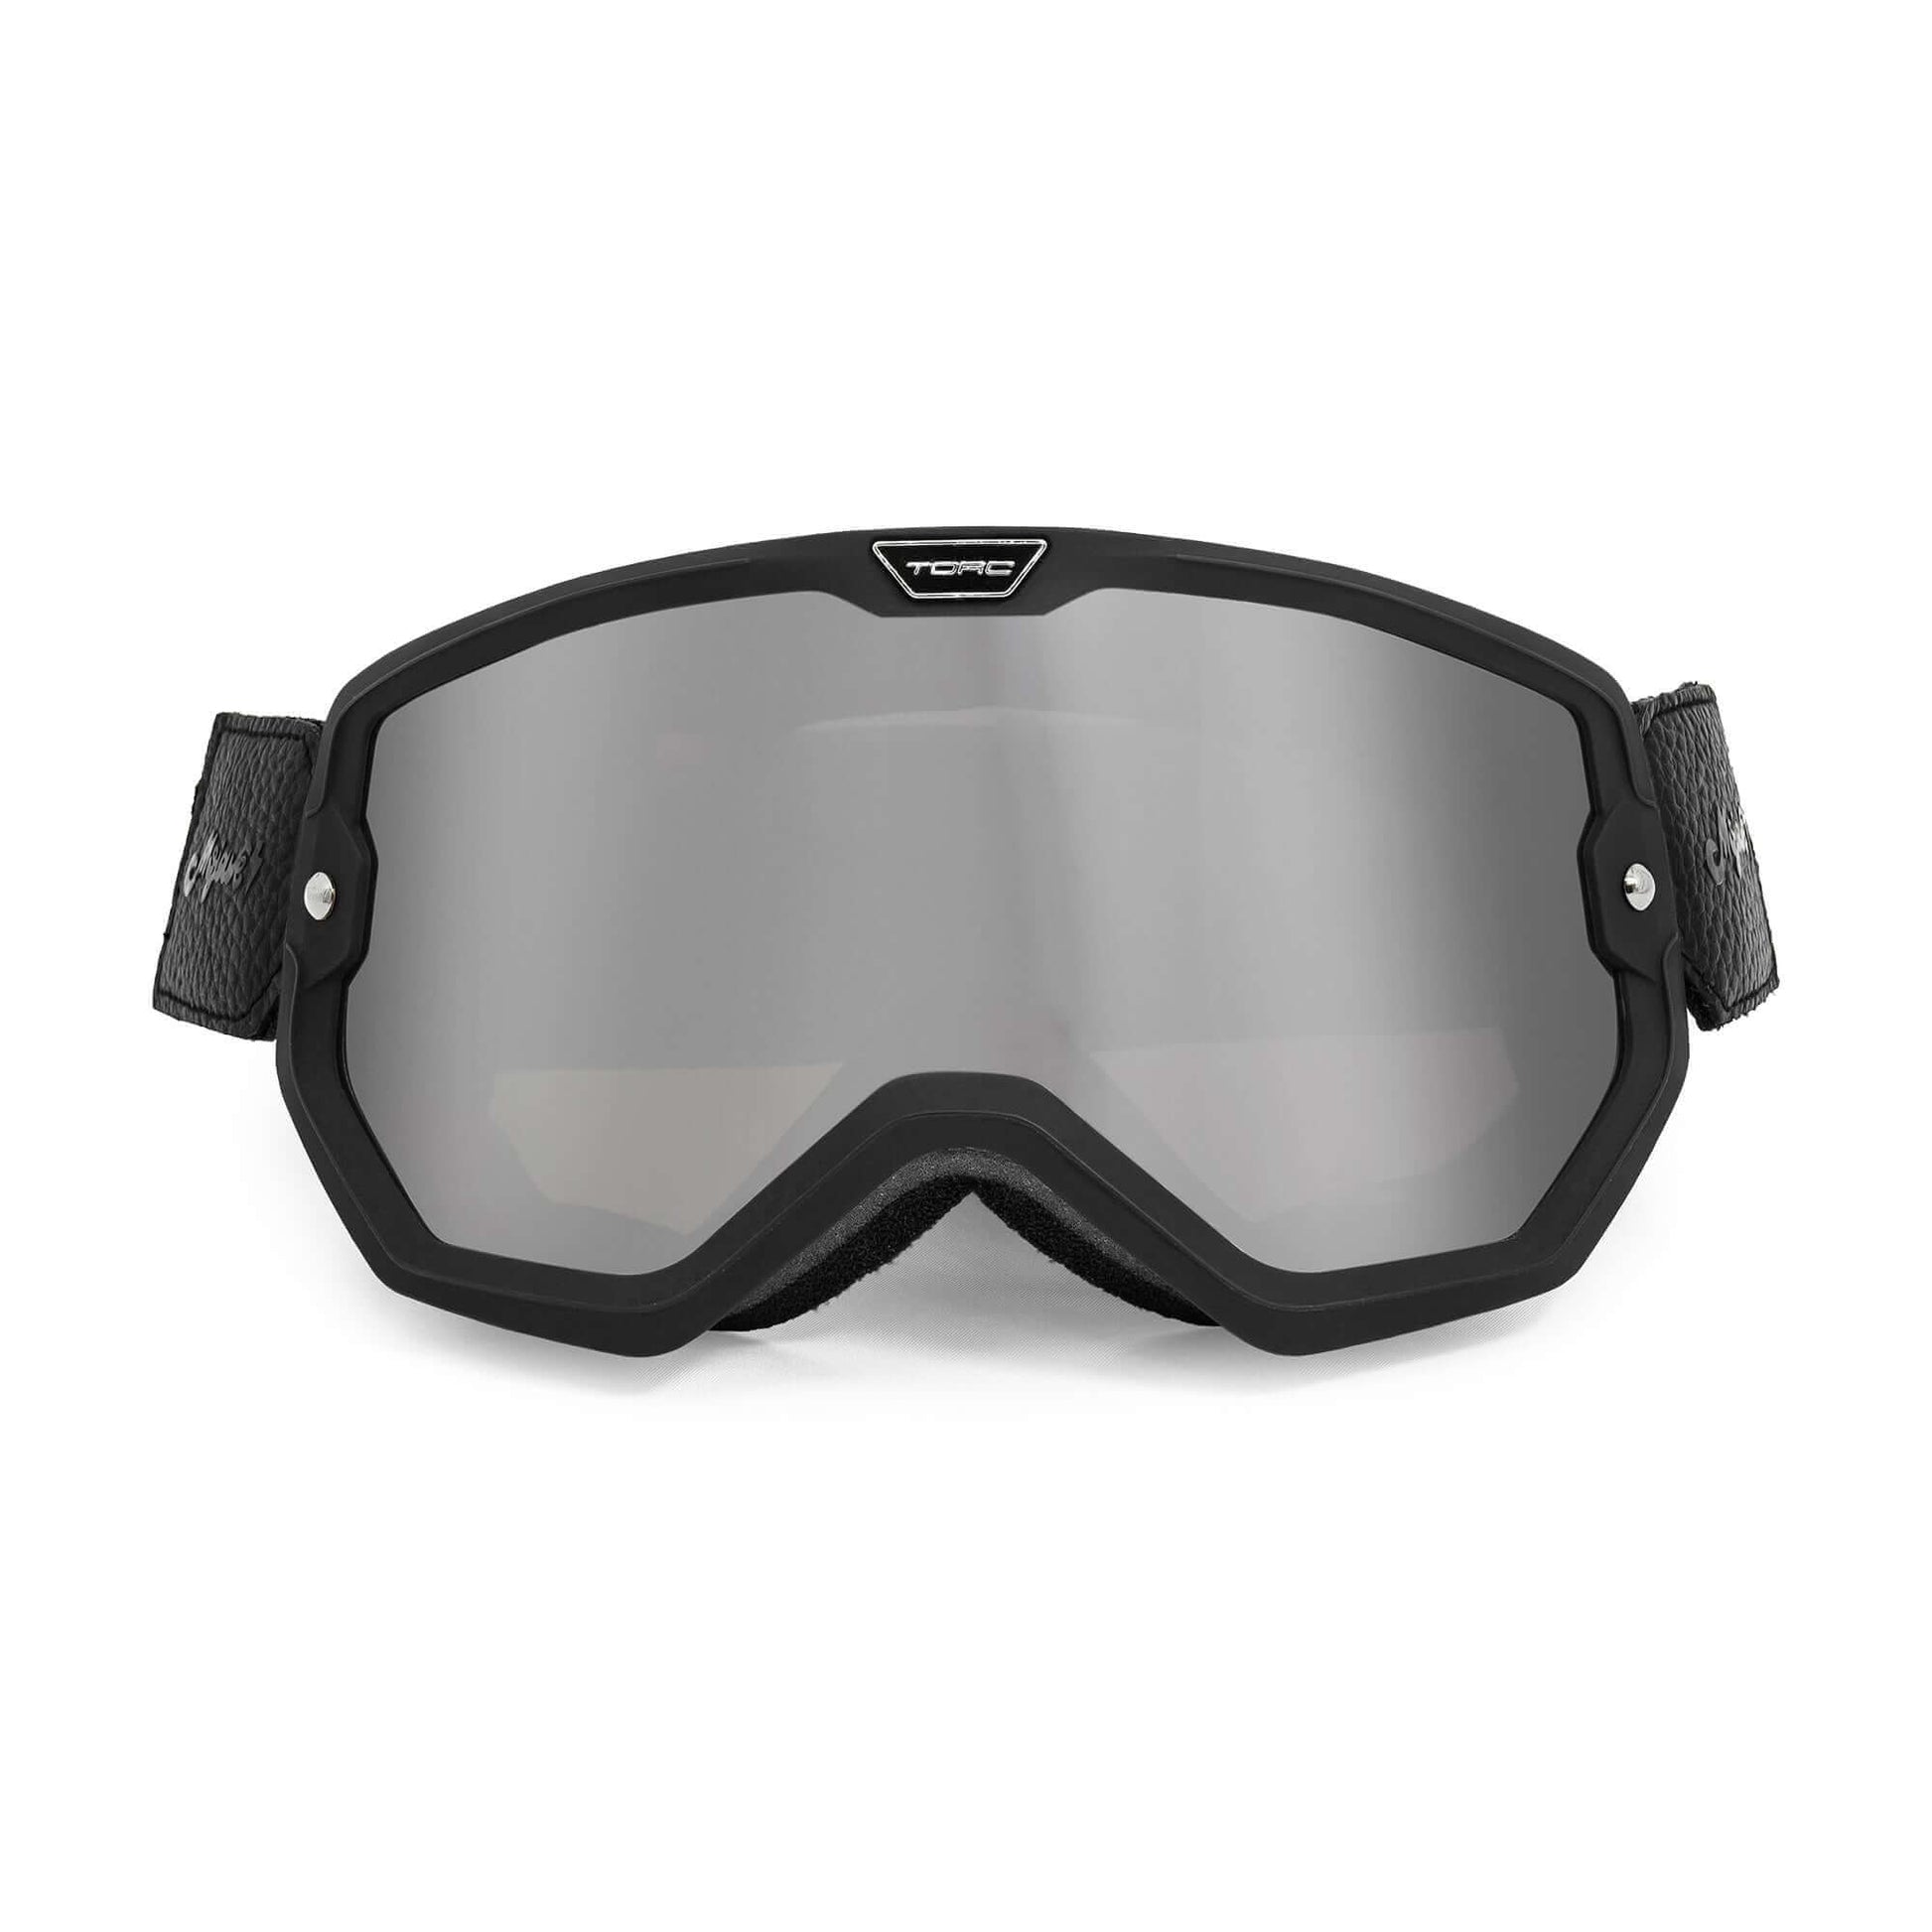 Torc Mojave Goggle Black Out visor